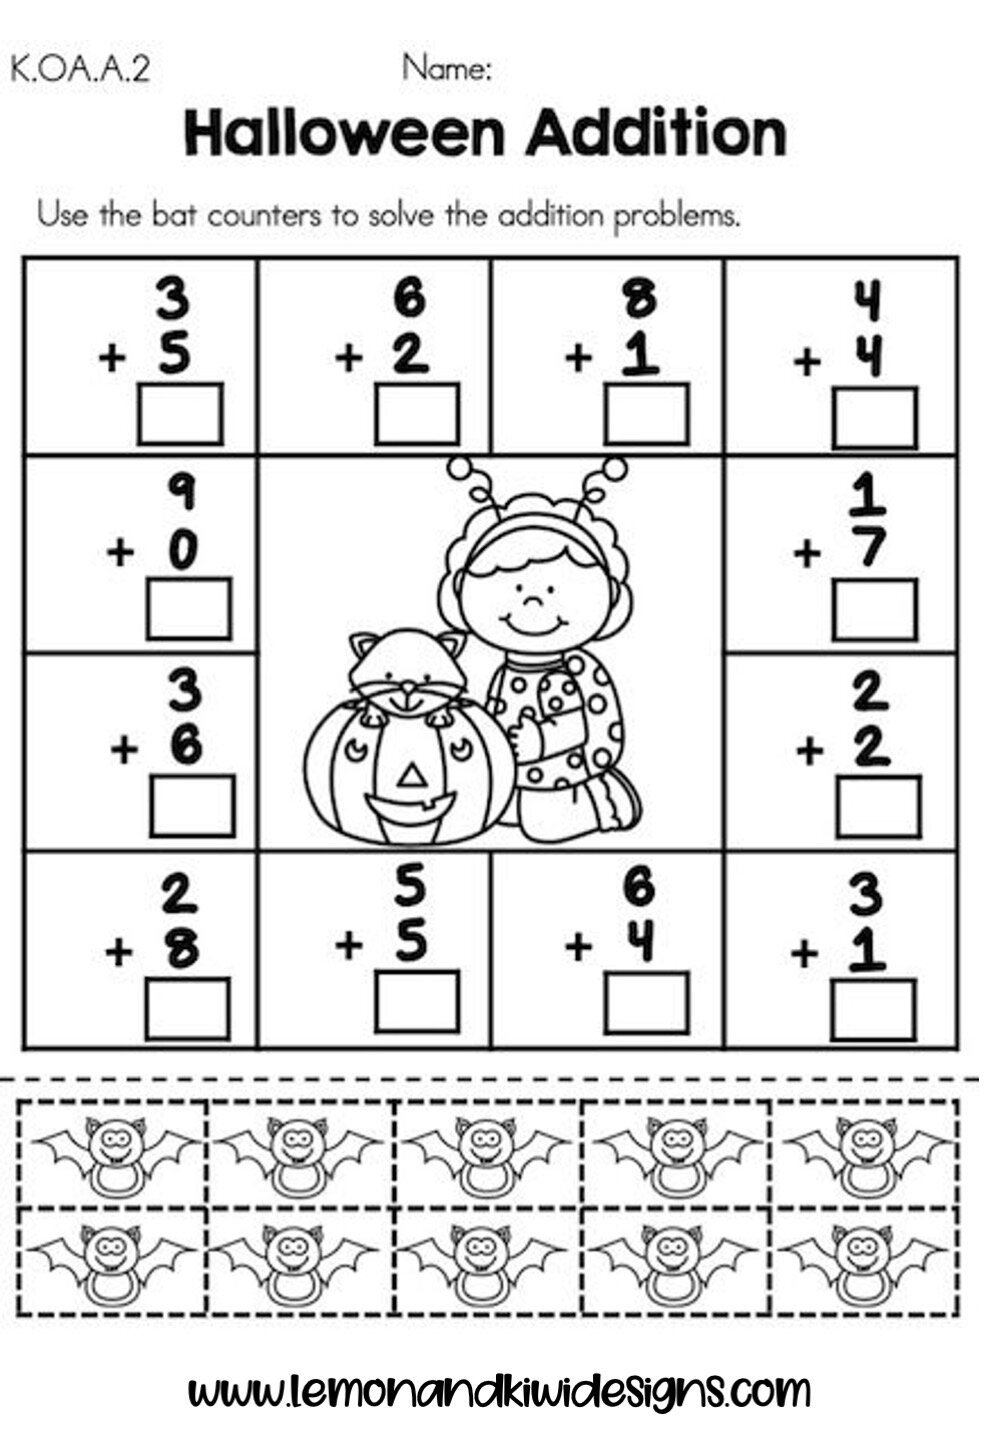 Free Spooktacular Halloween Math Worksheets For Kids — Lemon